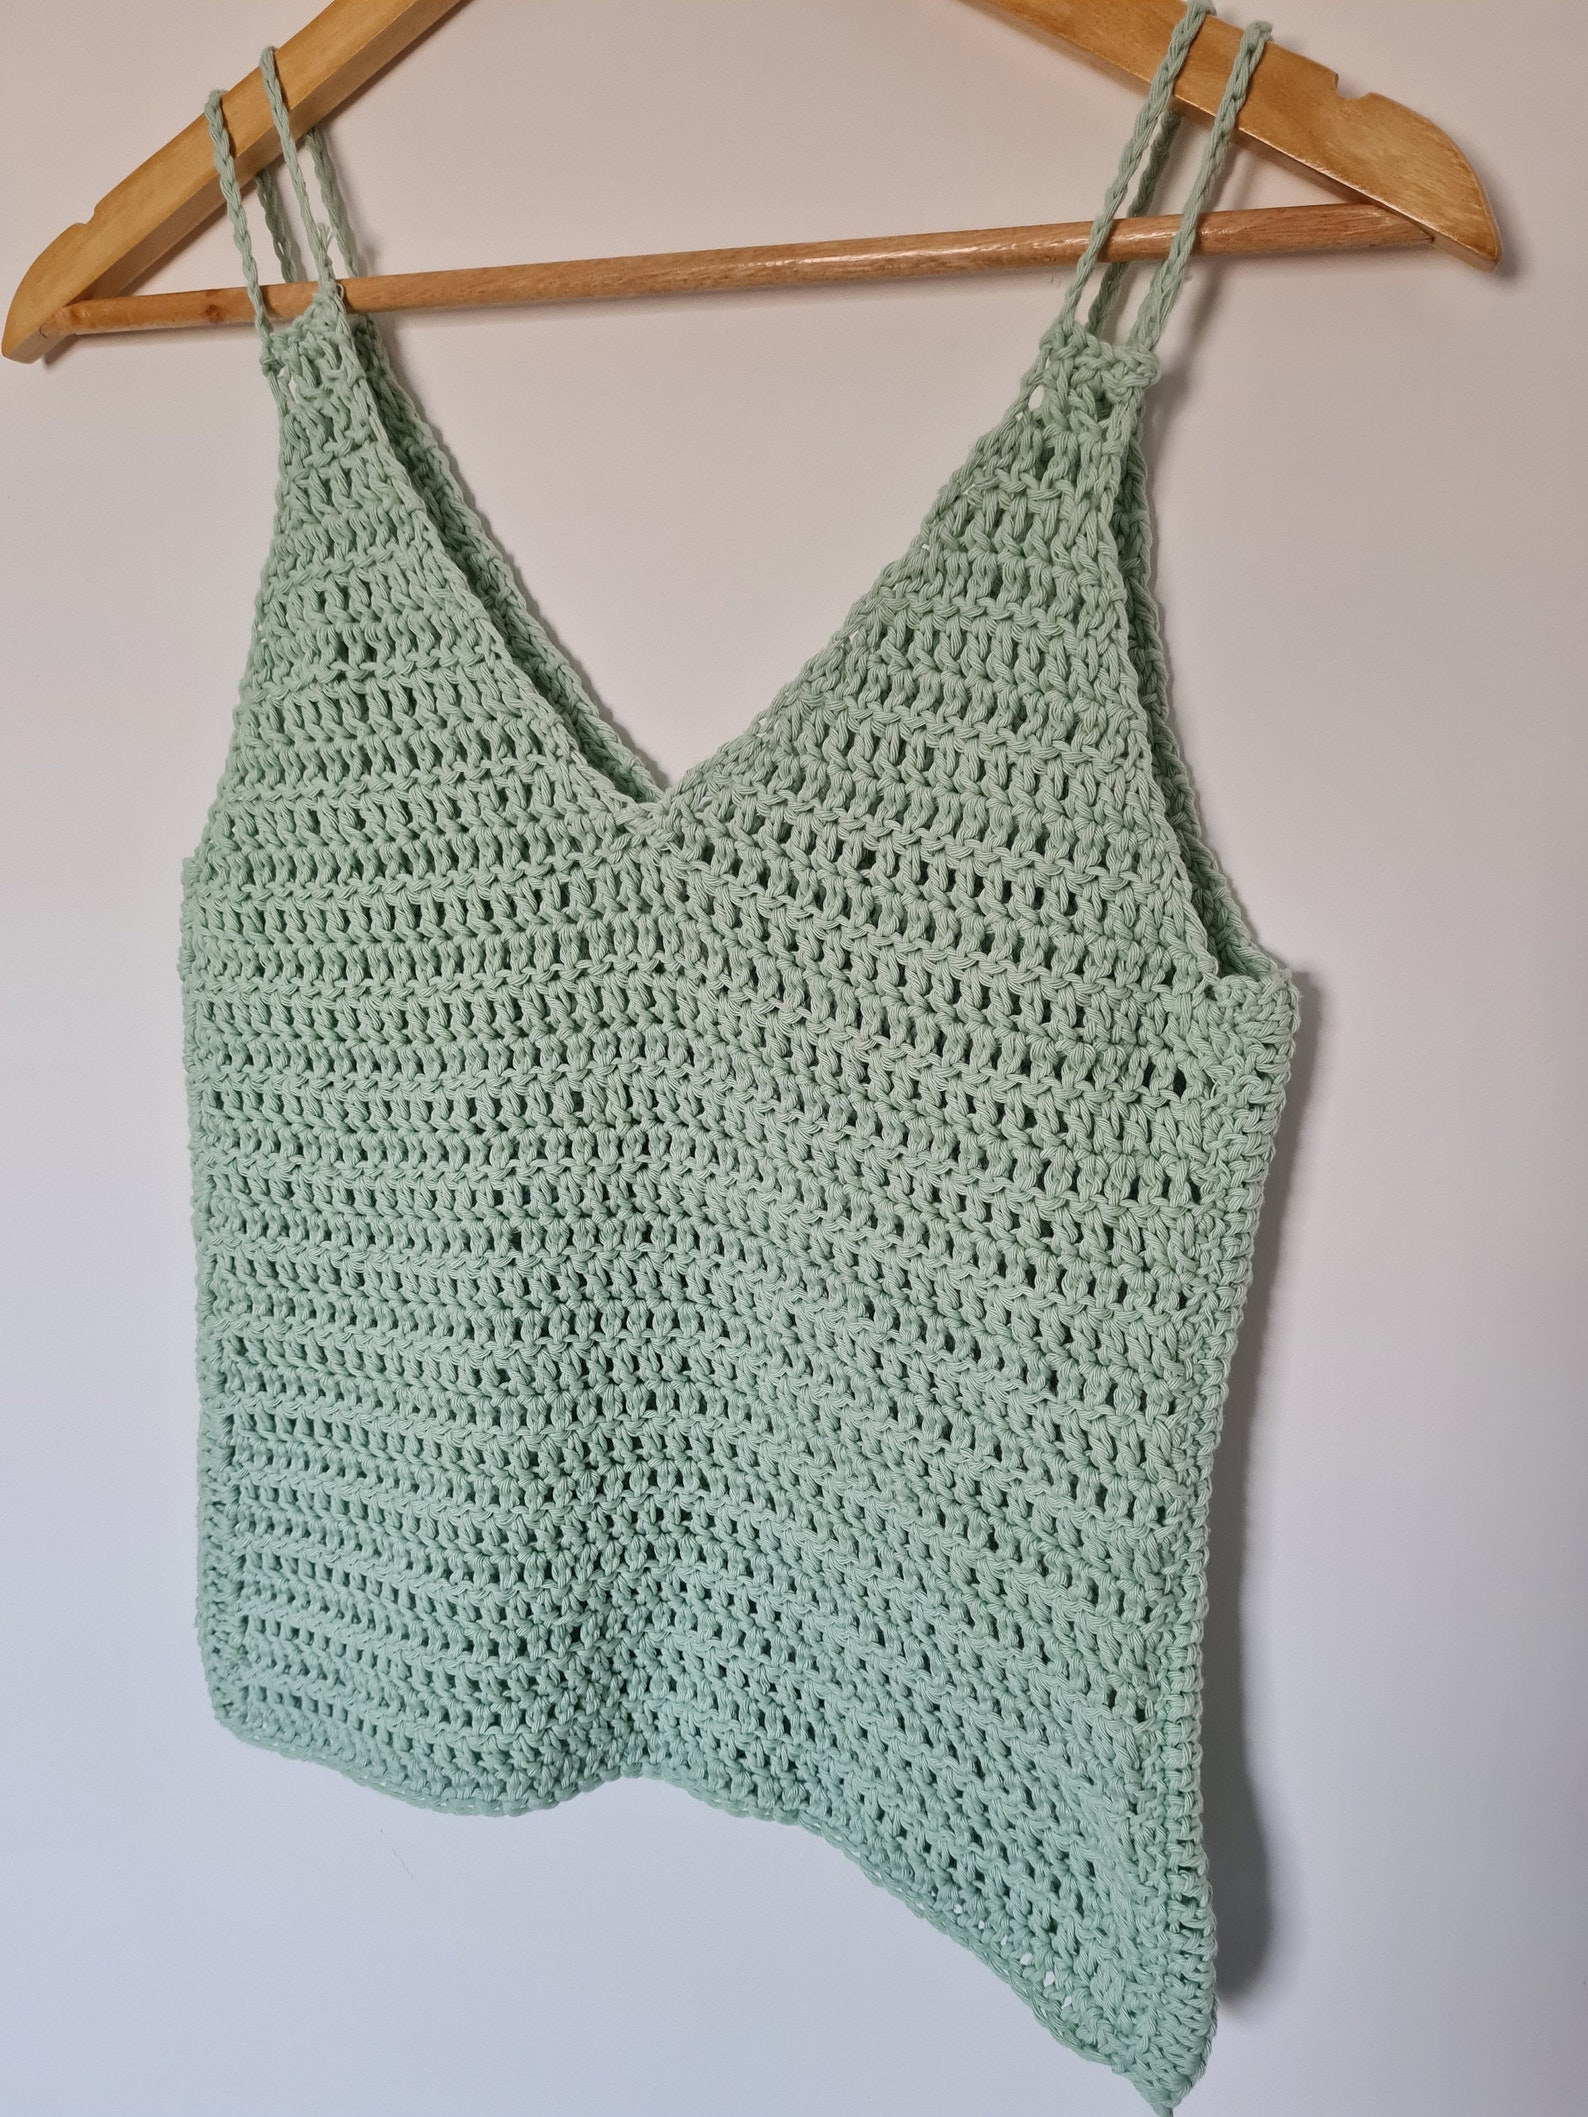 Beginner Crochet Top Pattern PDF to make a Boho lace Tank Top | Etsy